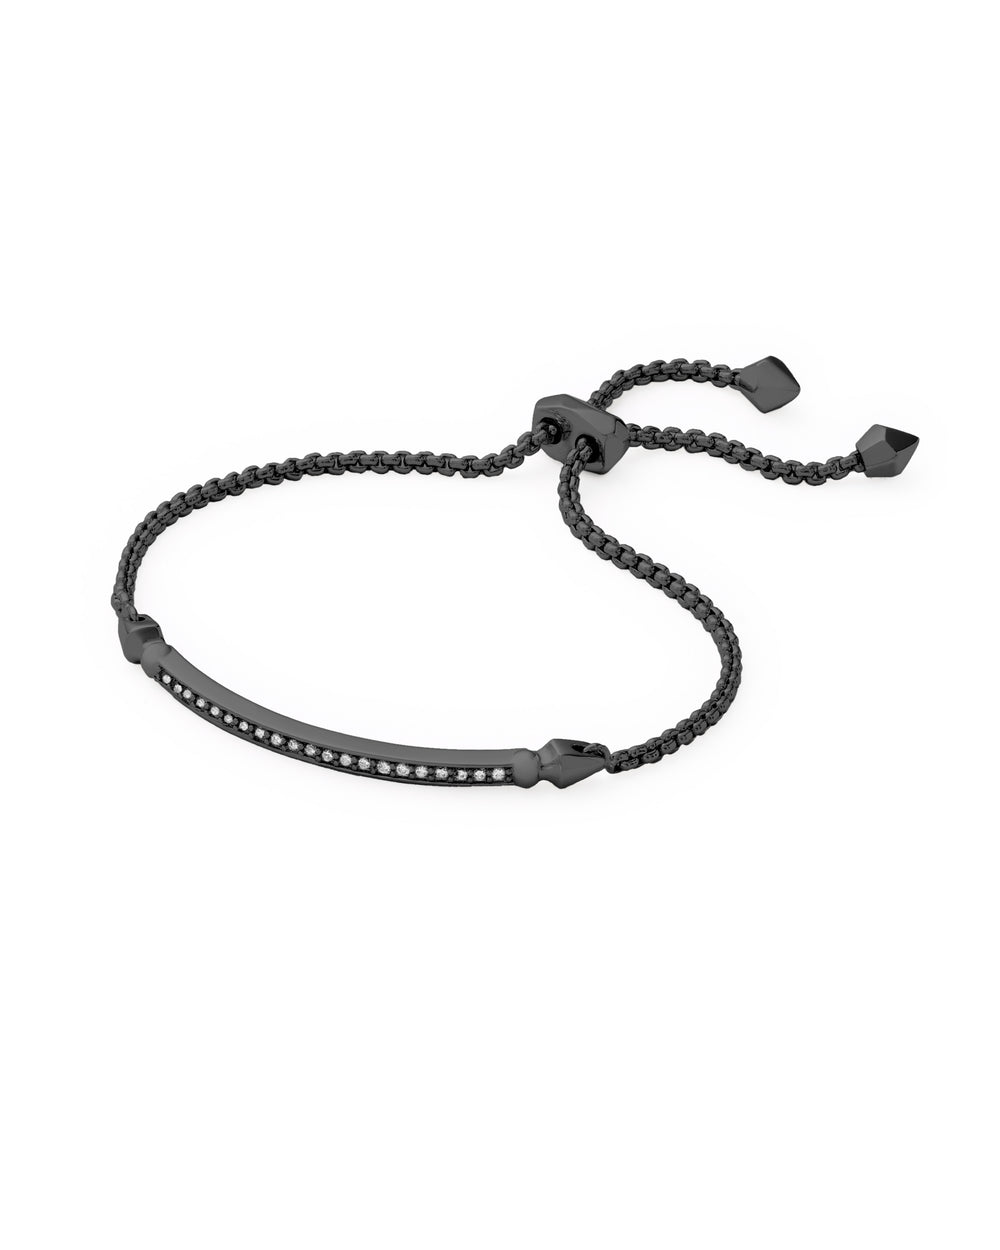 Ott Adjustable Chain Bracelet in Gun Metal